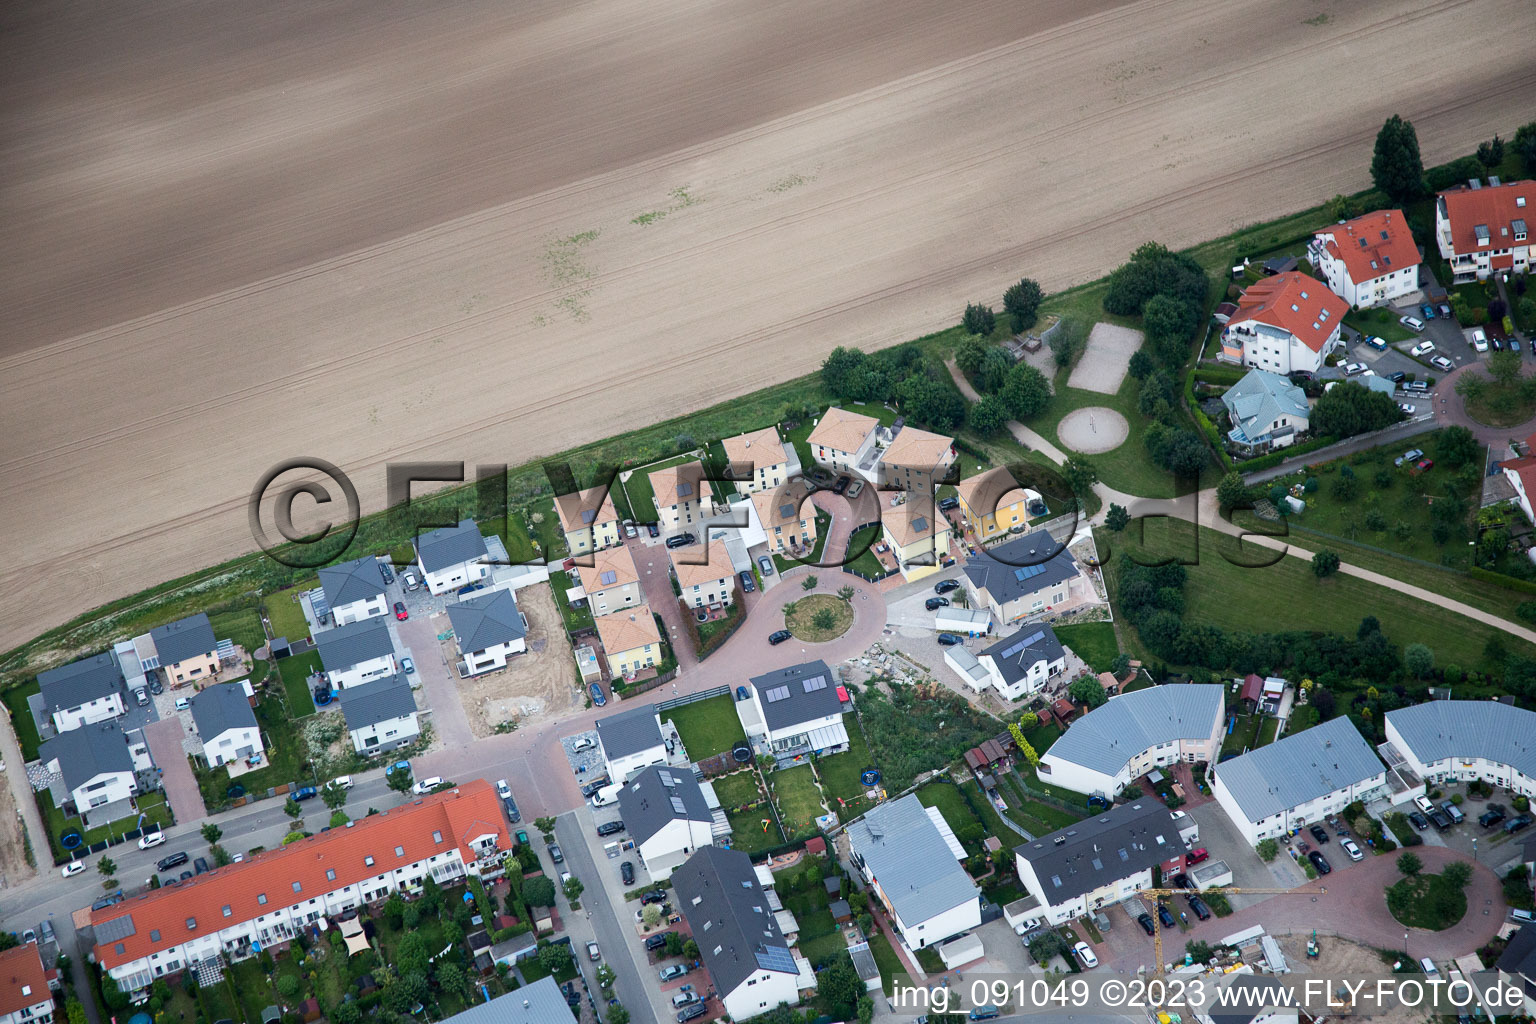 Quartier Oggersheim in Ludwigshafen am Rhein dans le département Rhénanie-Palatinat, Allemagne vue du ciel